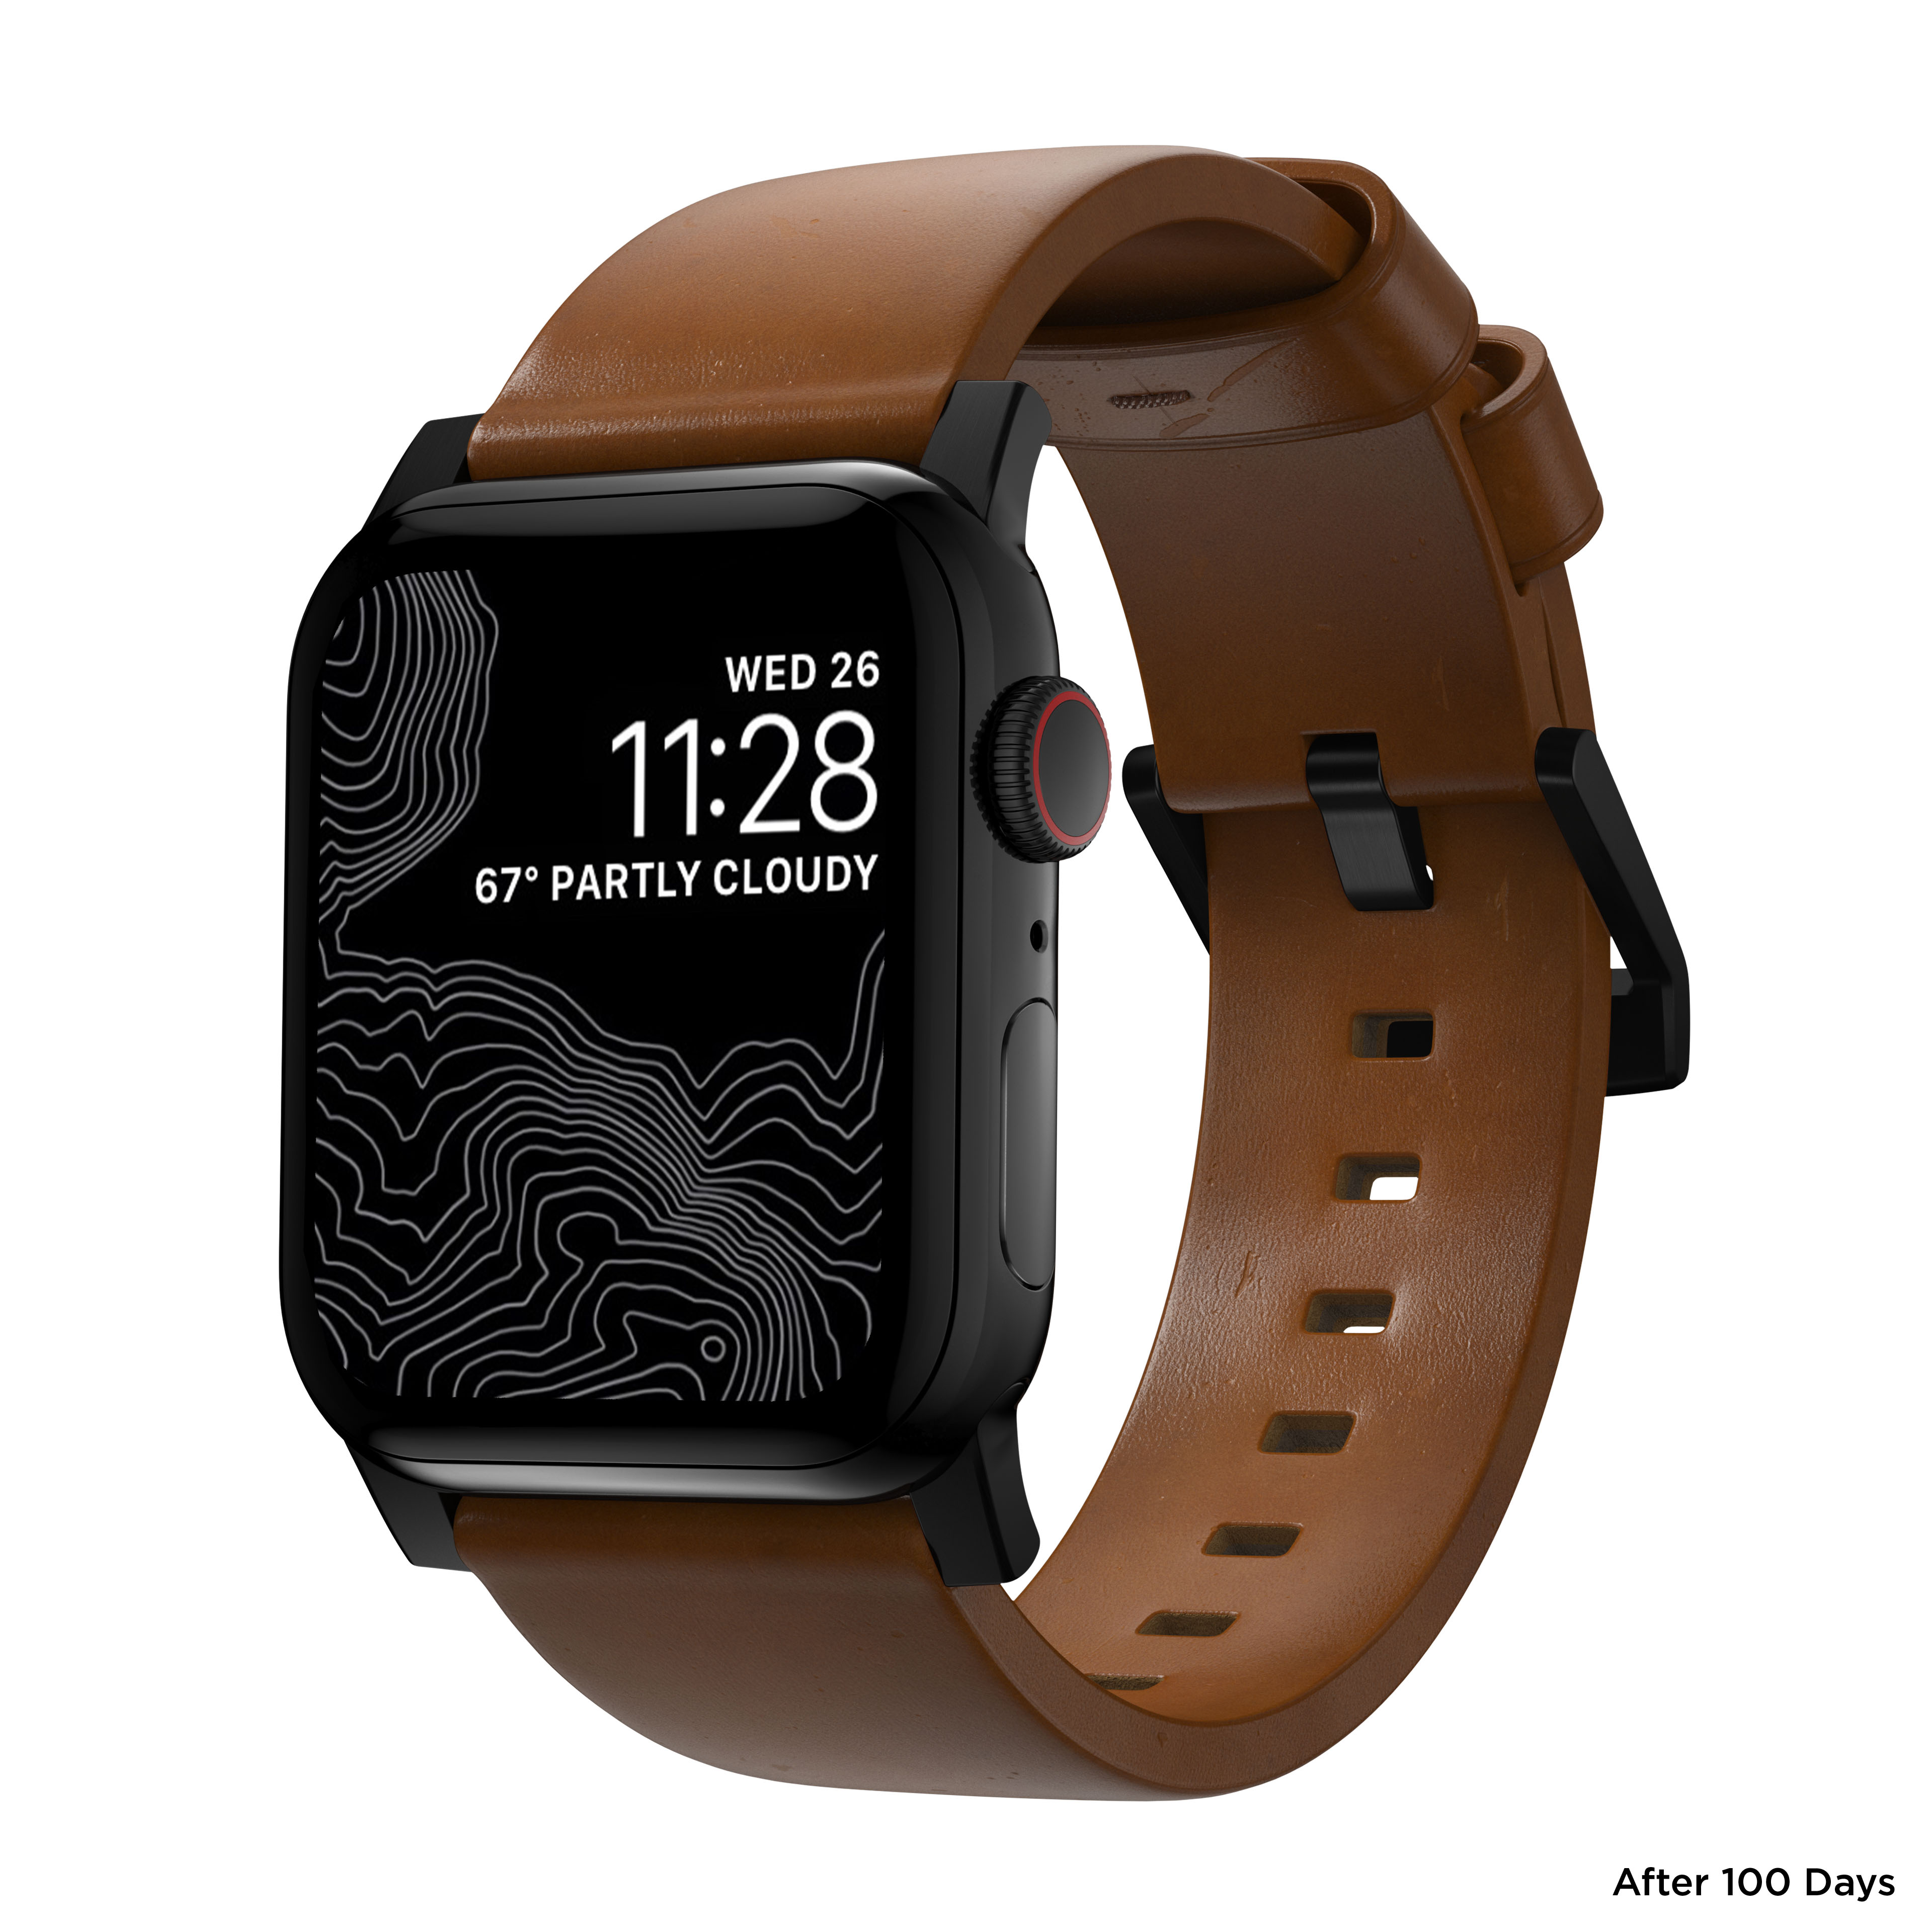 Modern Leather Band Apple Watch 42mm English Tan (Black Hardware)